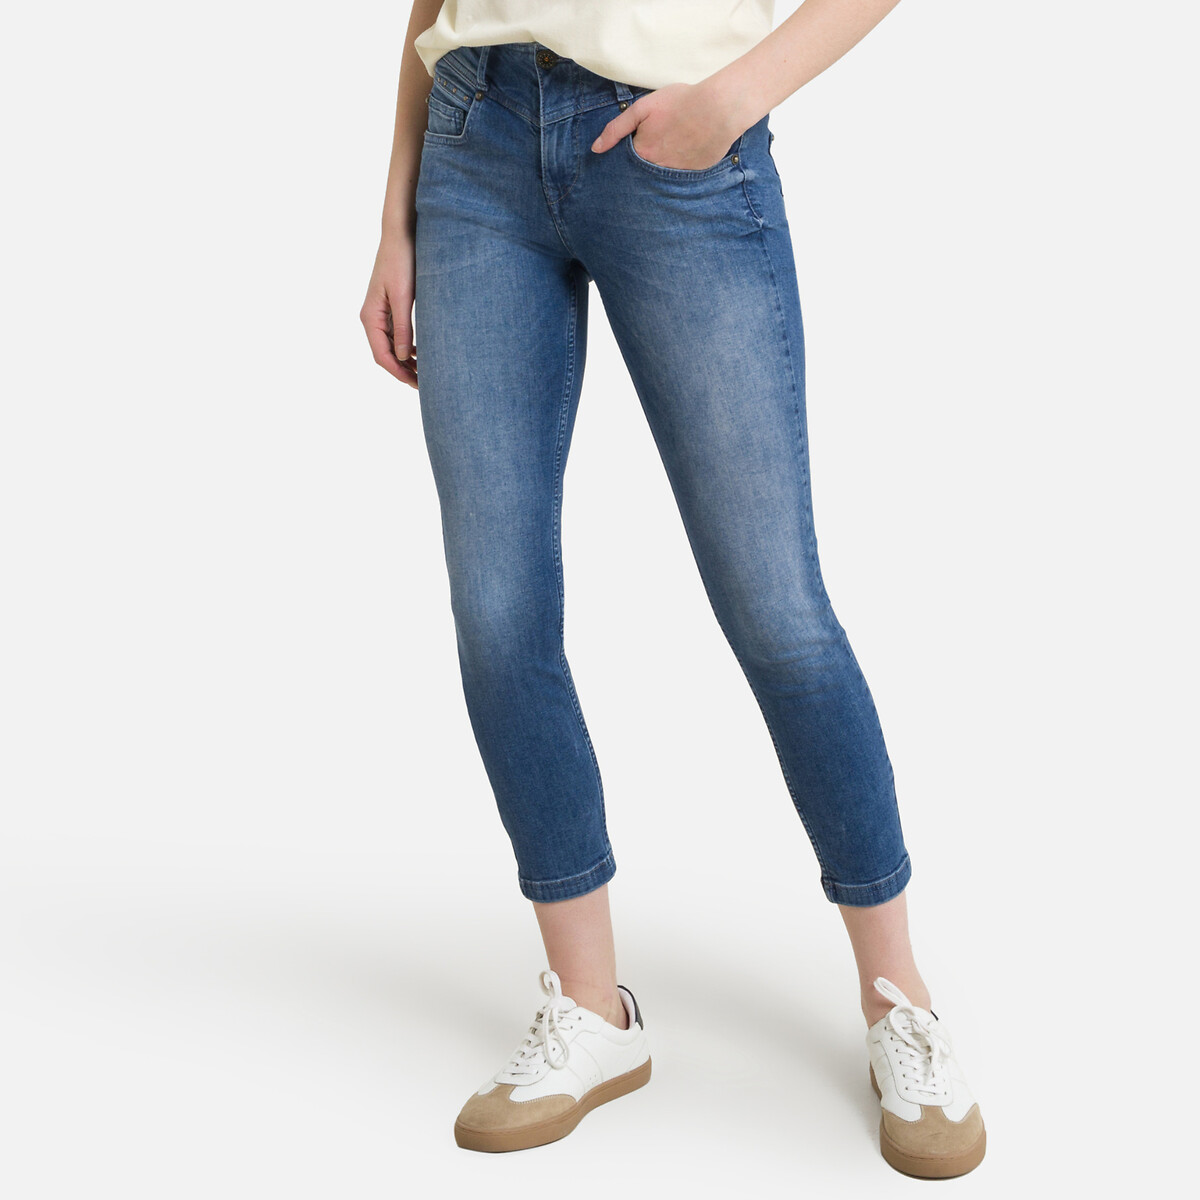 Skinny Jeans for Women | Straight Leg & Slim Fit | La Redoute